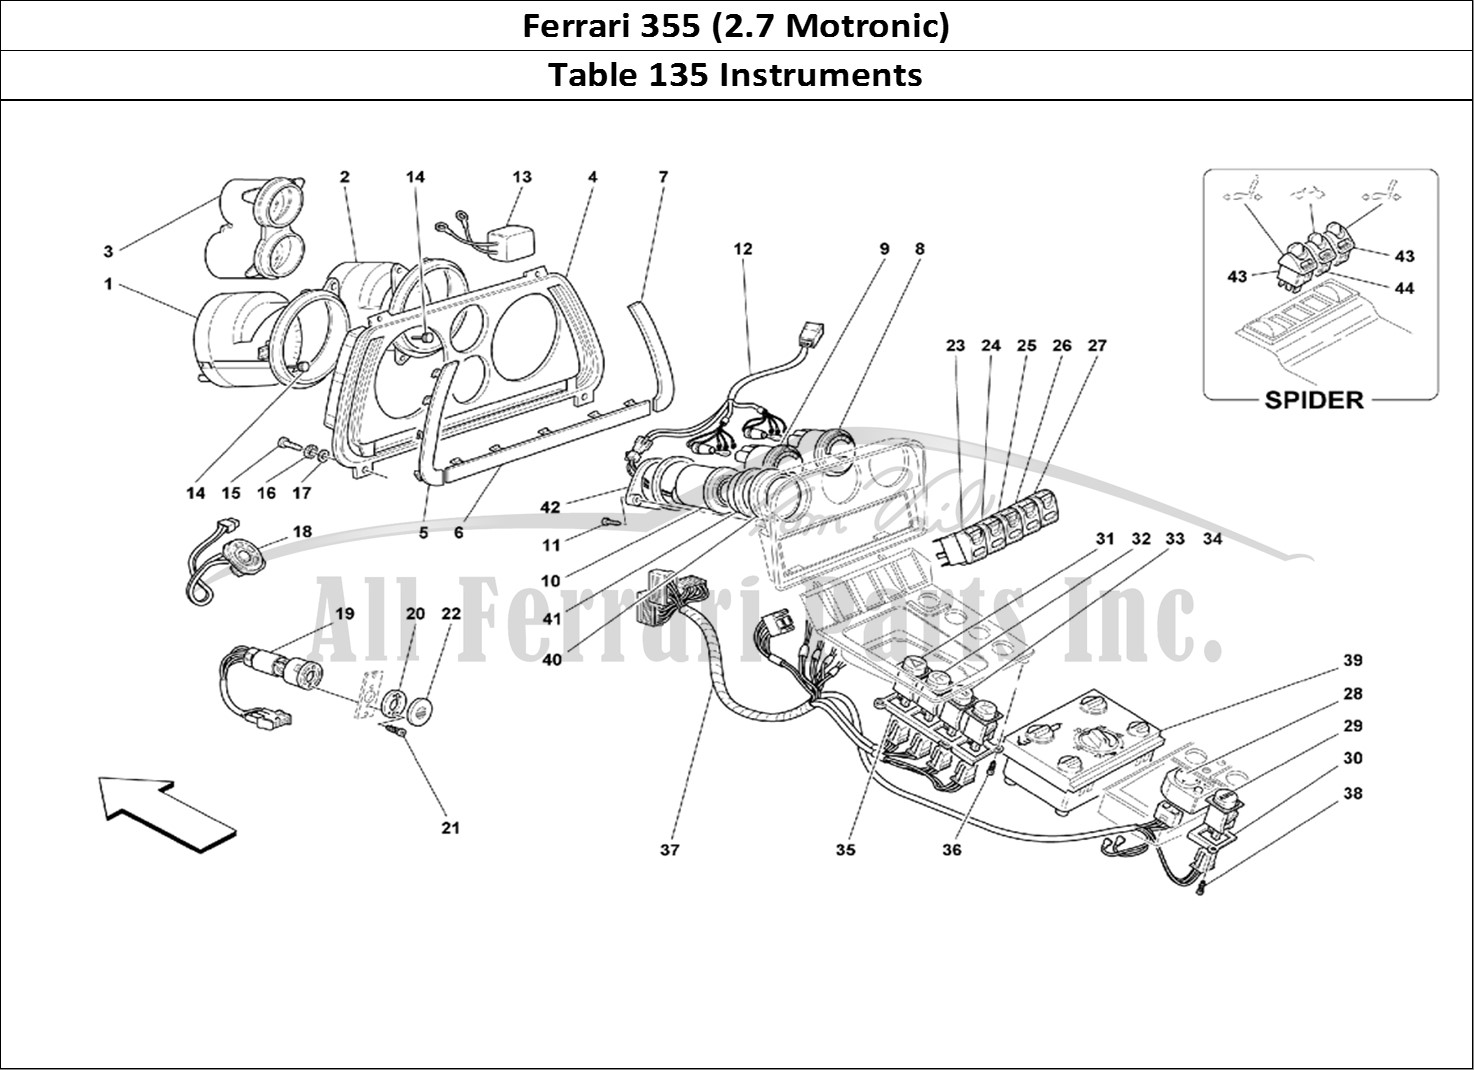 Ferrari Parts Ferrari 355 (2.7 Motronic) Page 135 Instruments